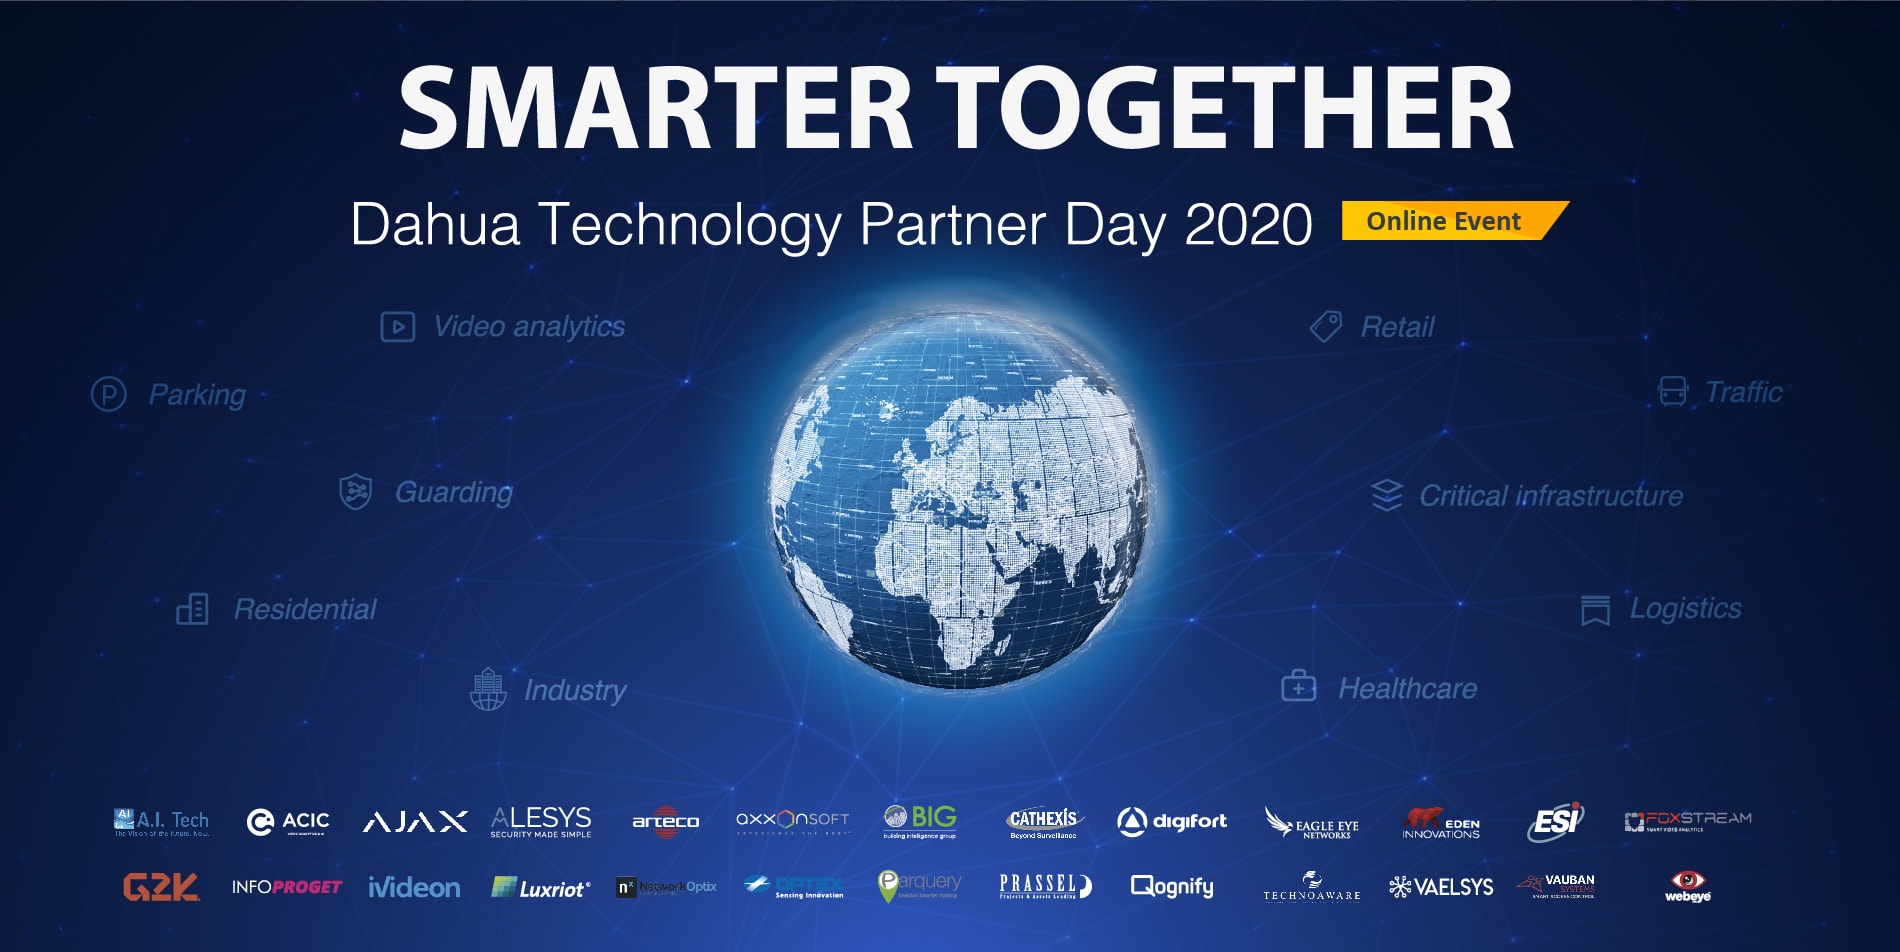 Dahua Technology organizará el Partner Day 2020 con 26 socios tecnológicos